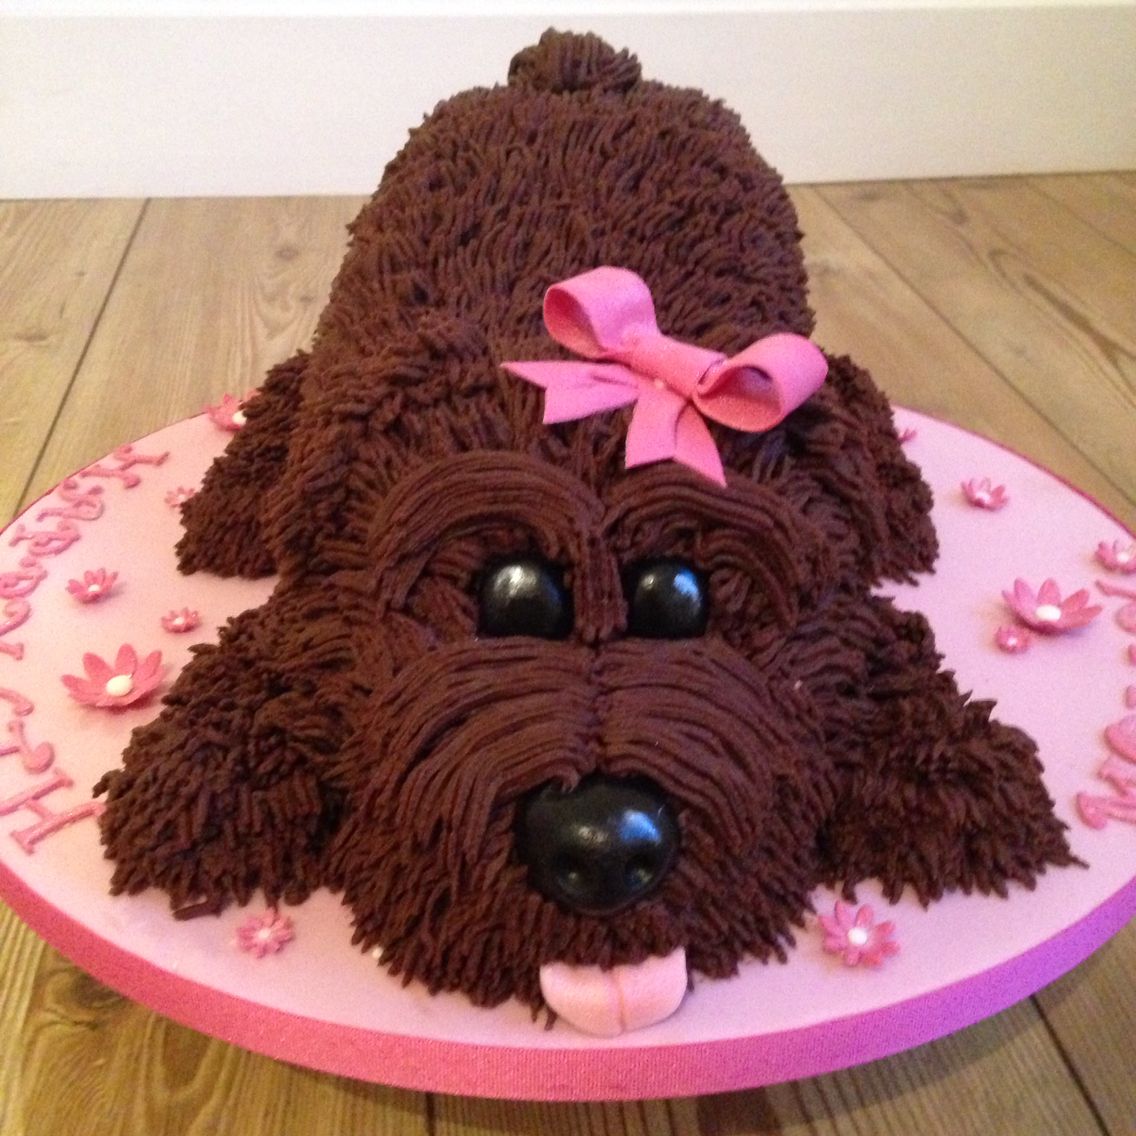 Chocolate dog shape cake